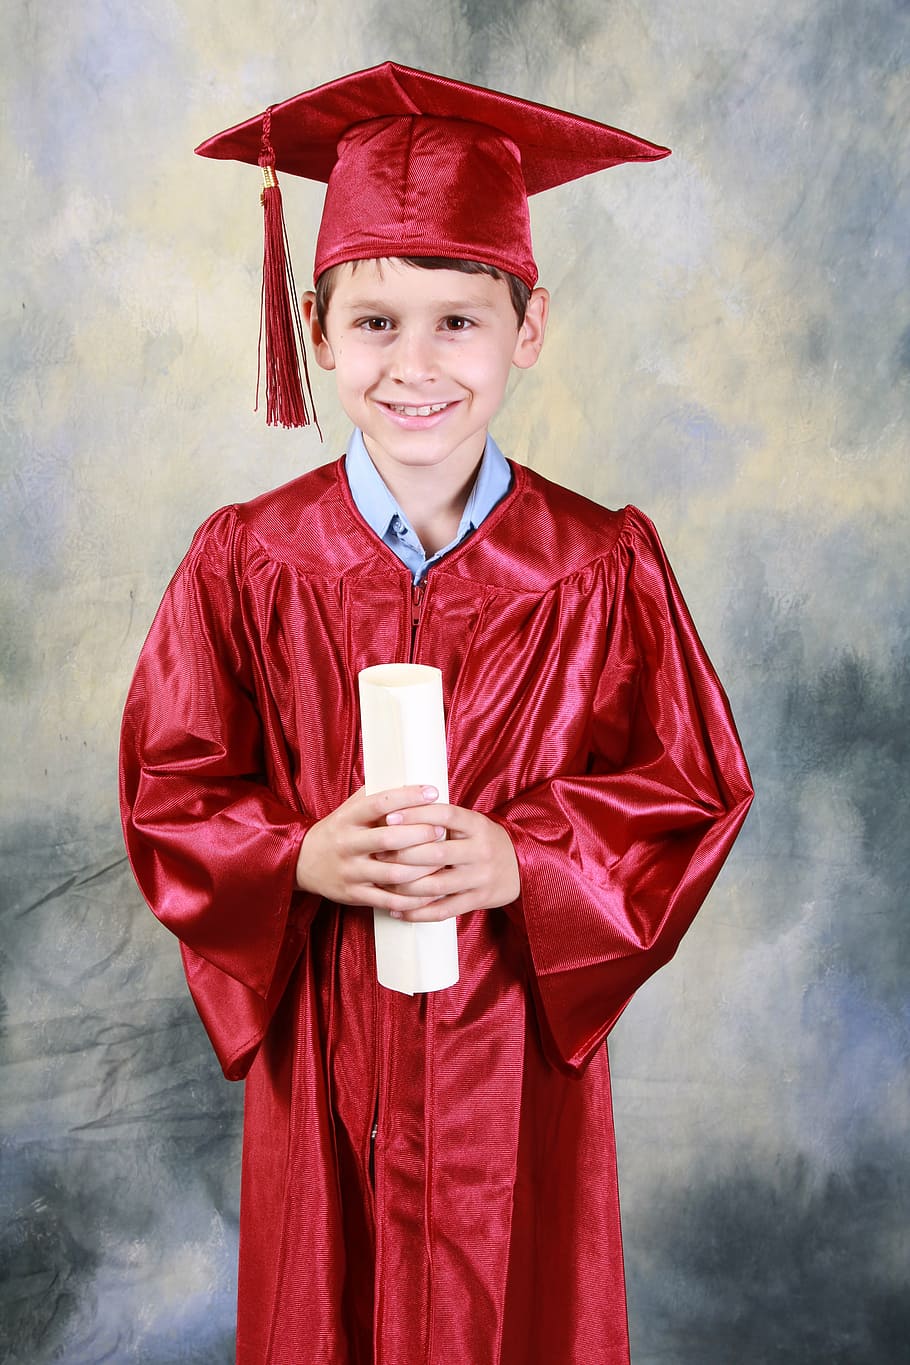 smiling boy wearing red academic dress holding diploma, graduation